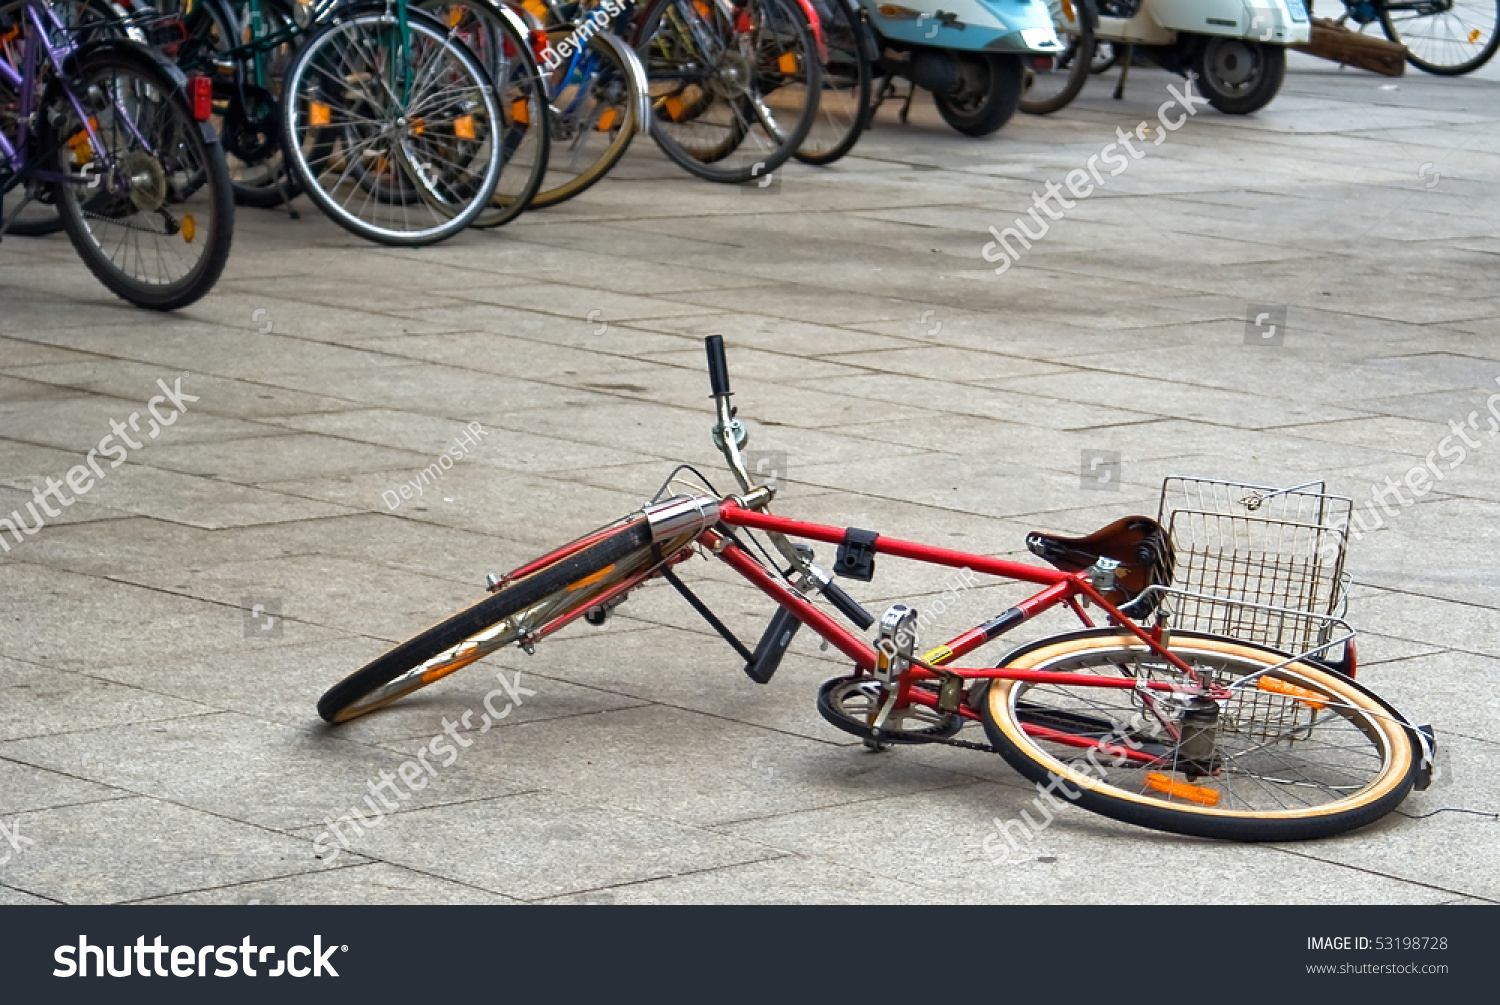 bike on the floor